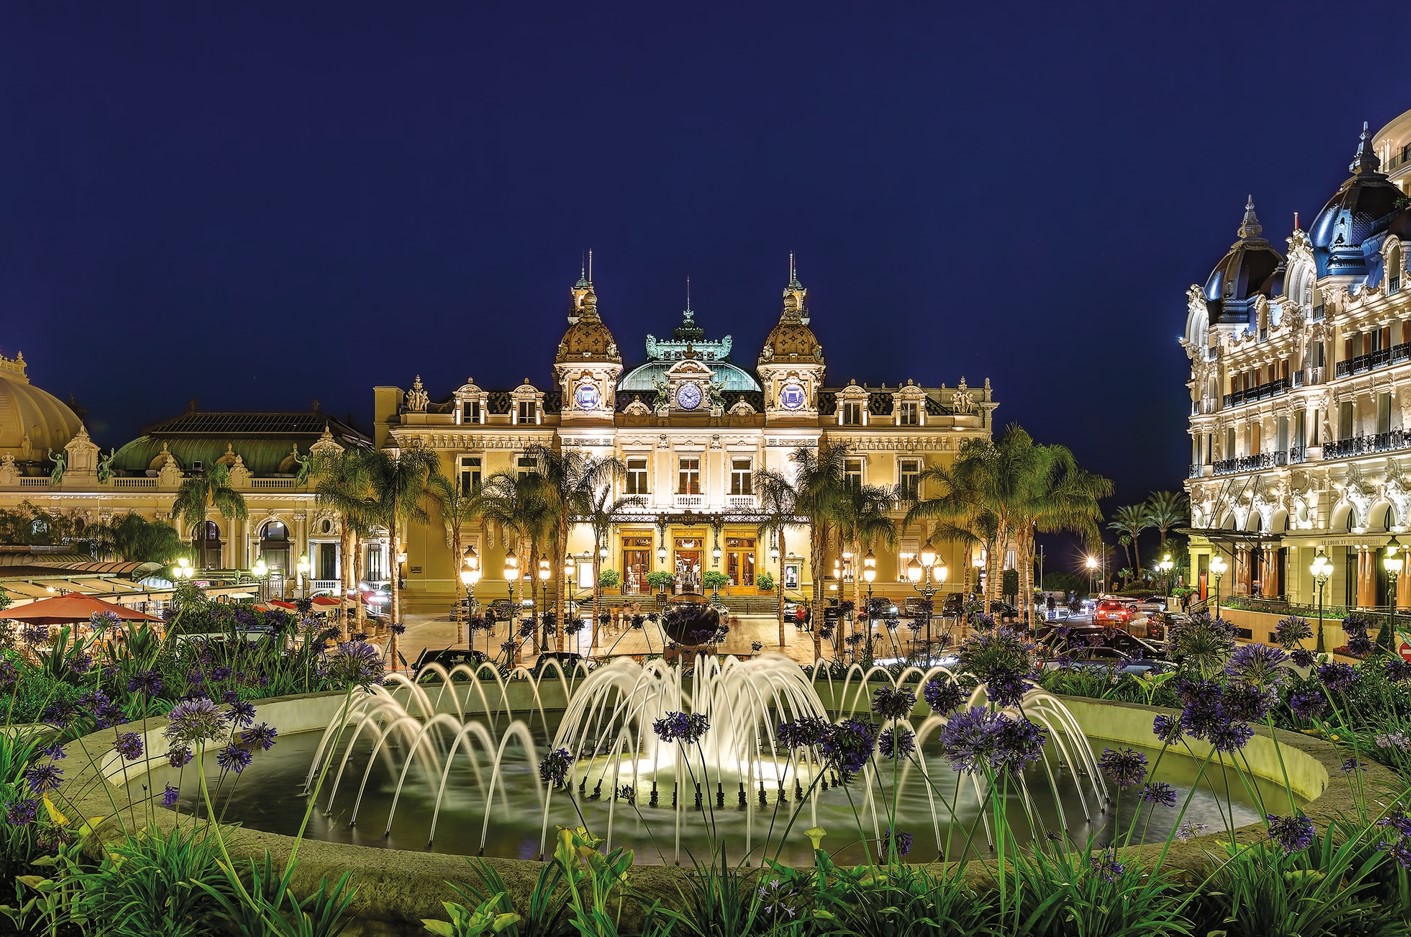 Casino de Monte-Carlo fountains